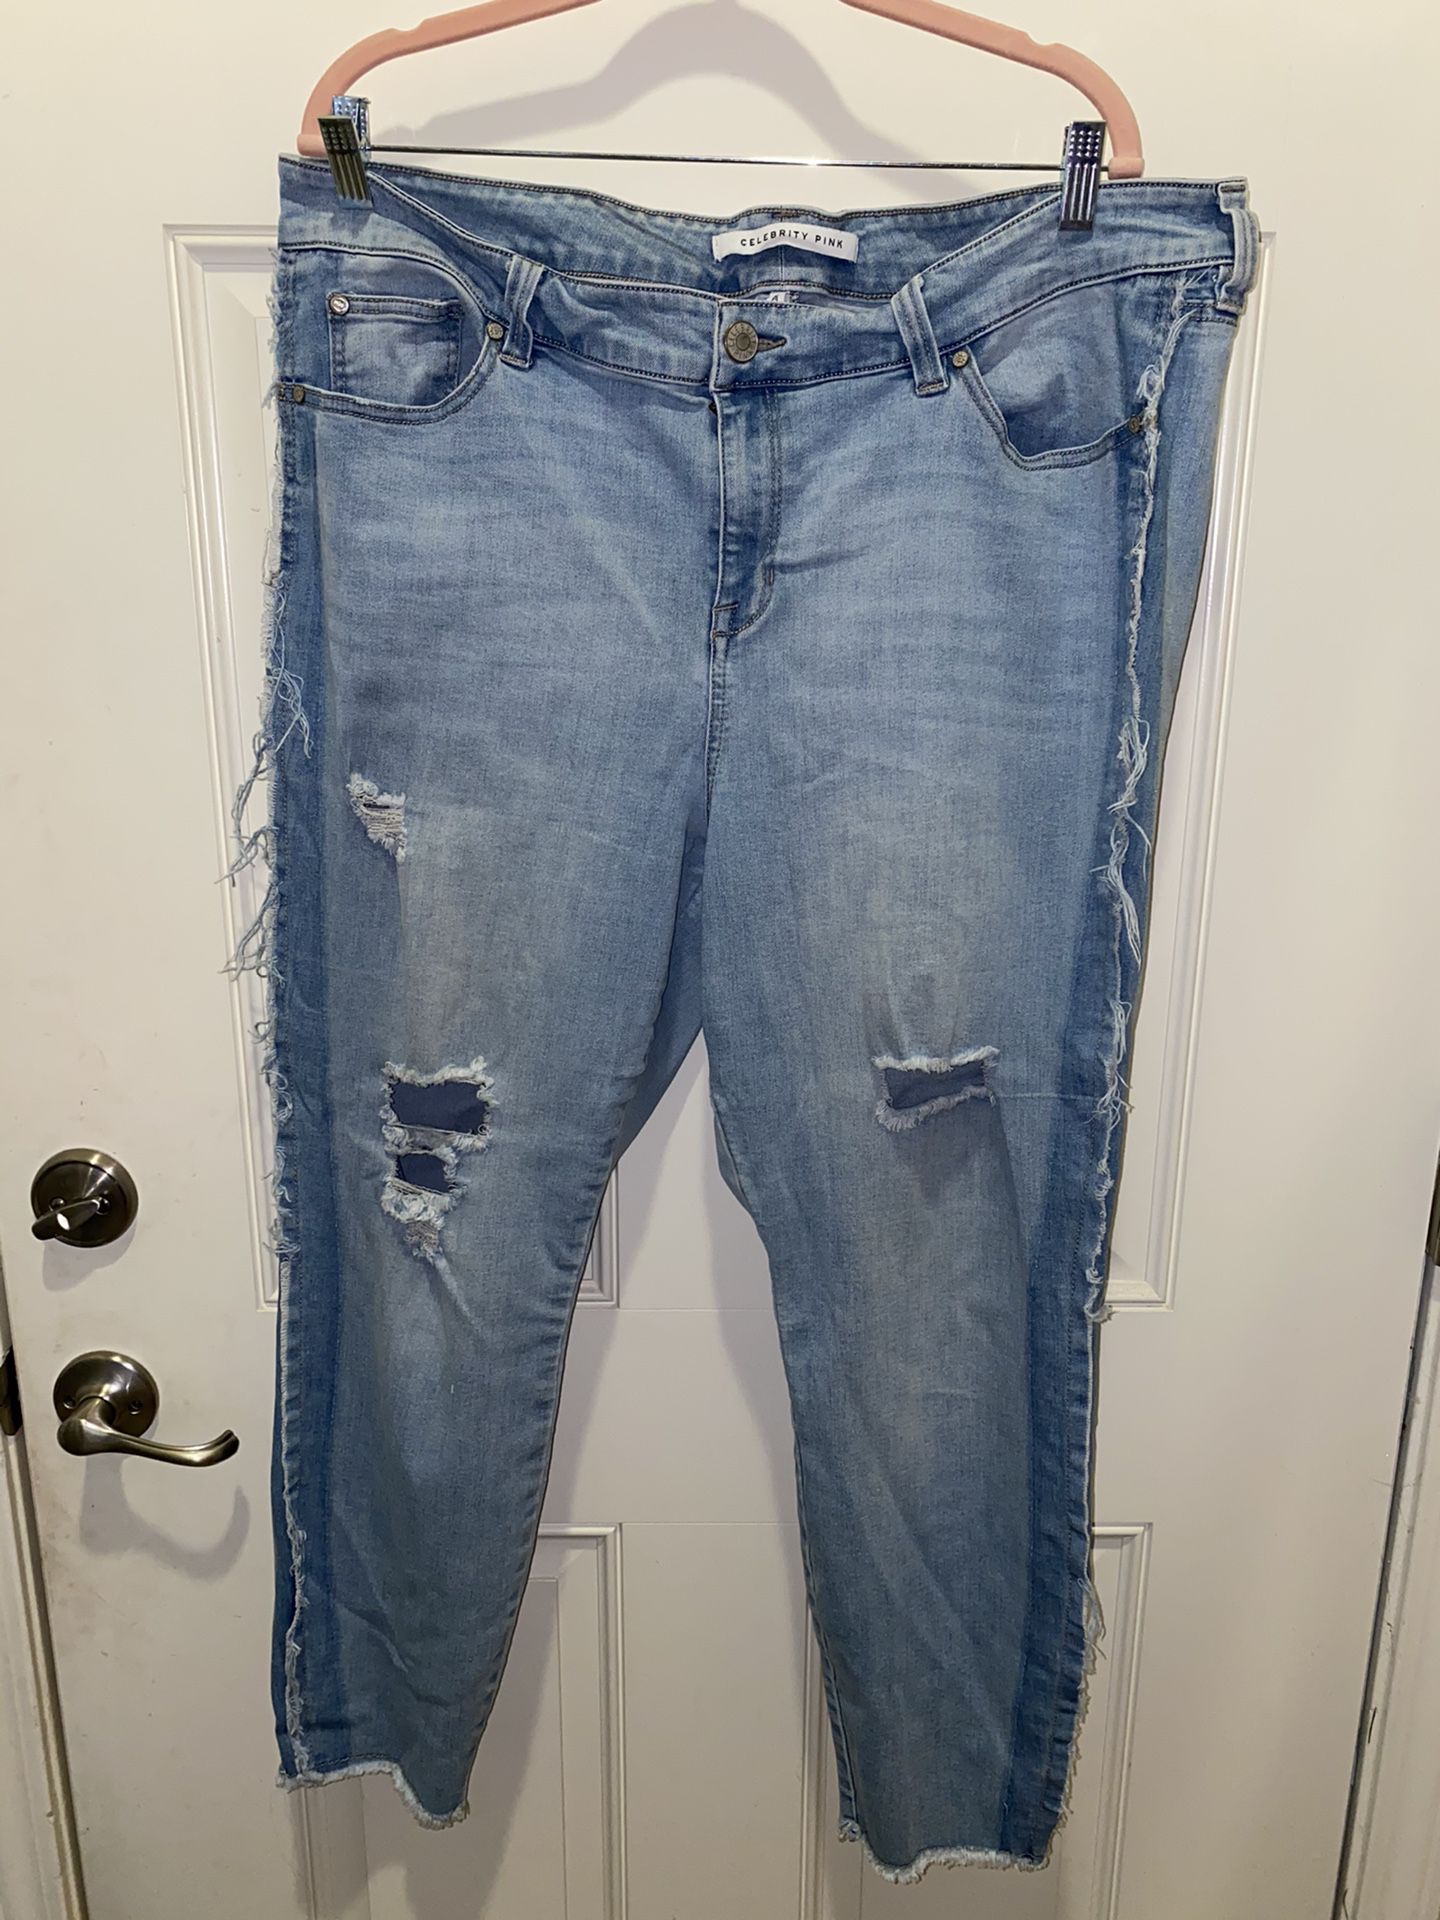 Distressed blue denim jeans size 20